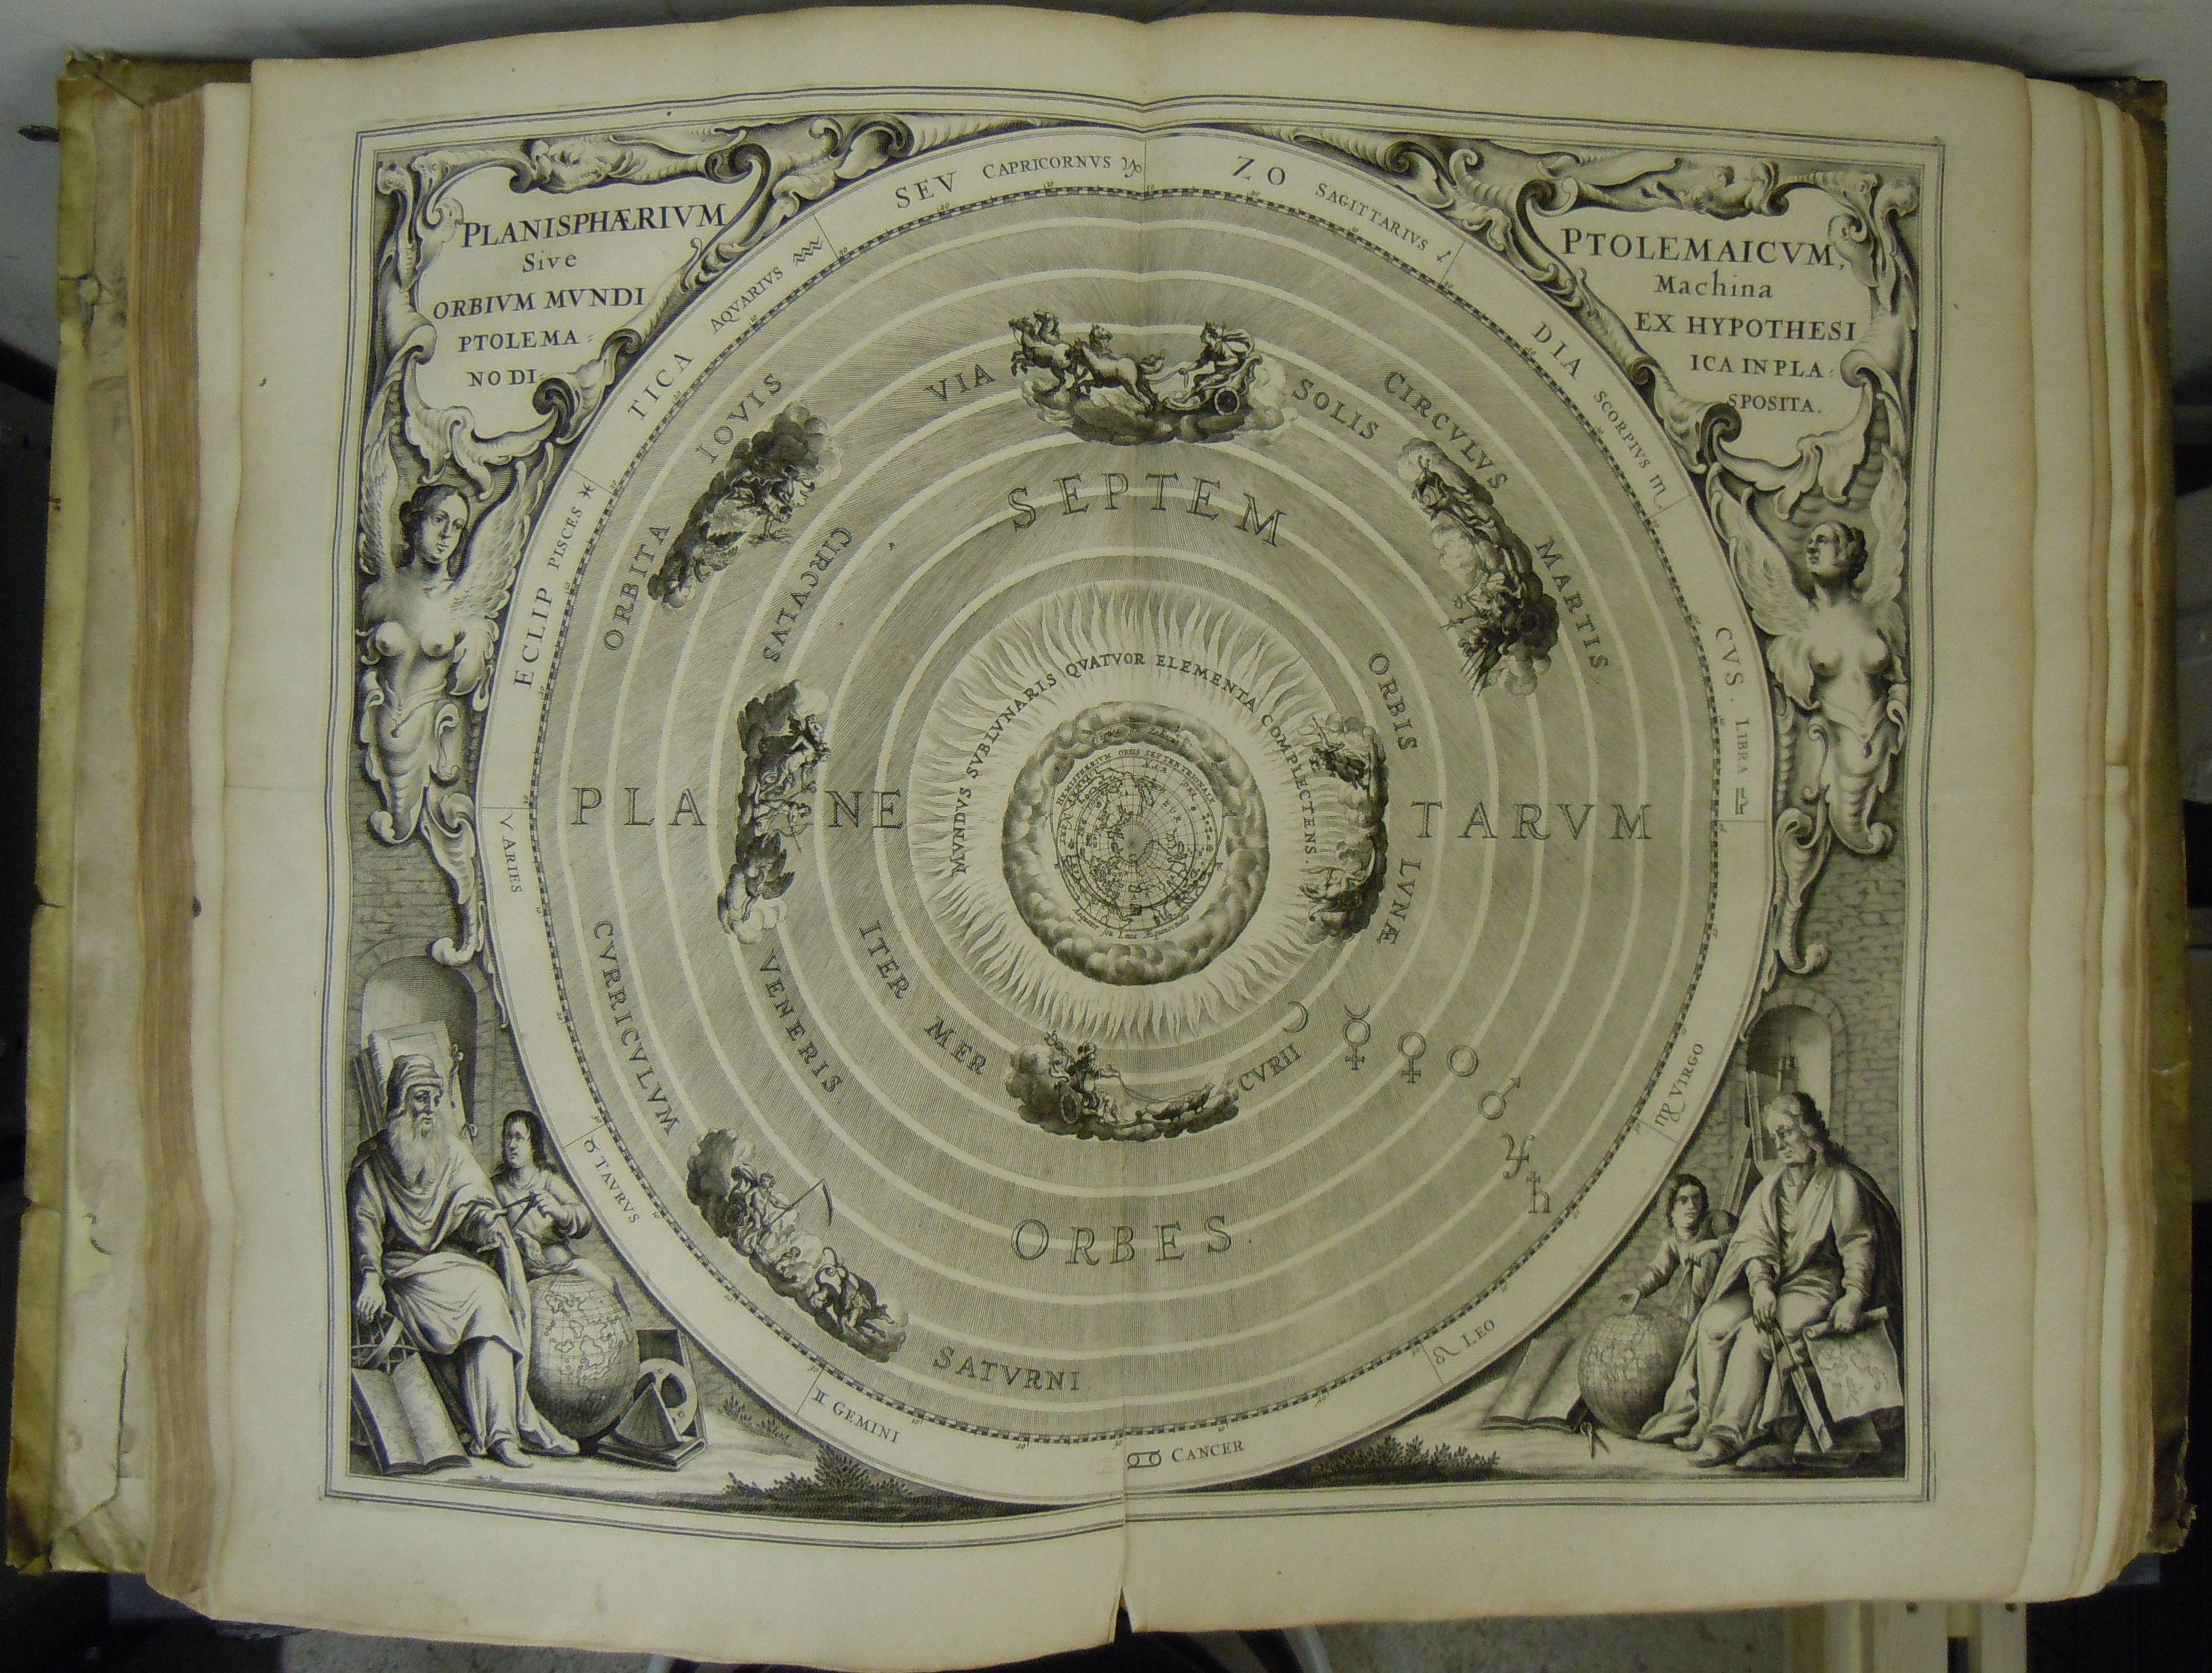 BT1.32.8, between pp. 8-9 of second sequence, Andreas Celarius’s Harmonia macrocosmica (1560)